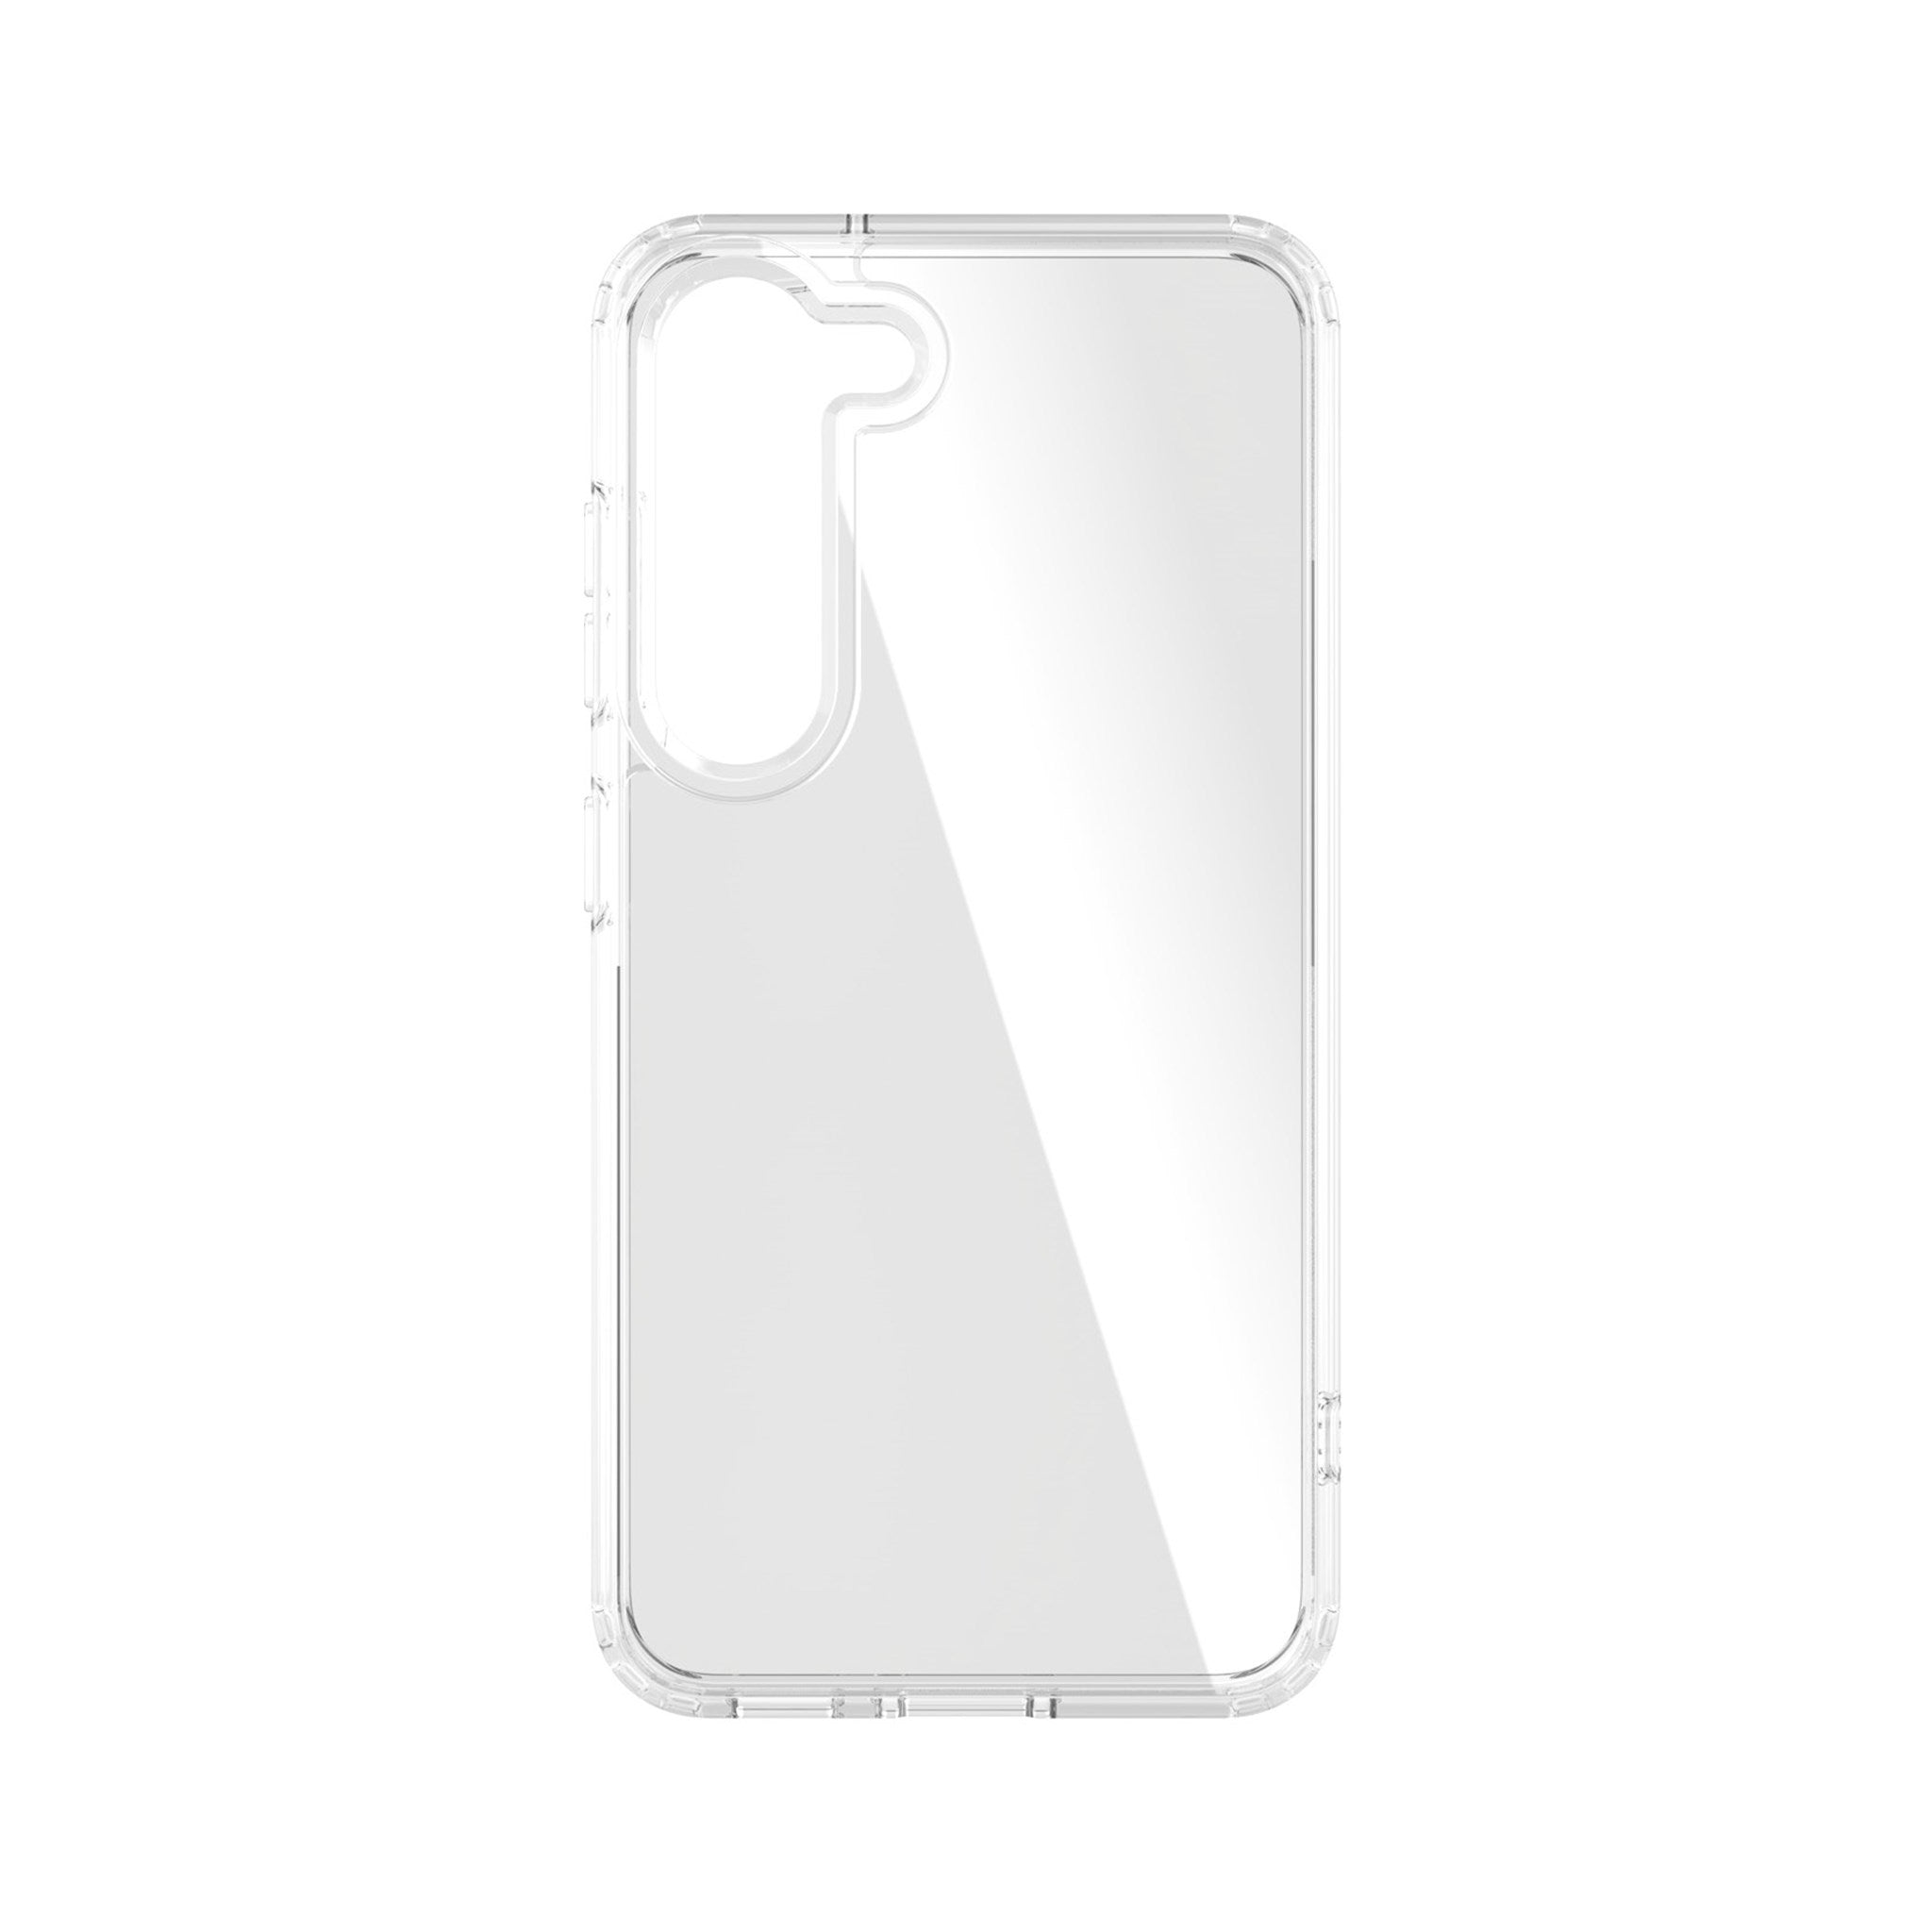 PANZERGLASS Transparent, Backcover, Samsung, Galaxy S23, Transparent